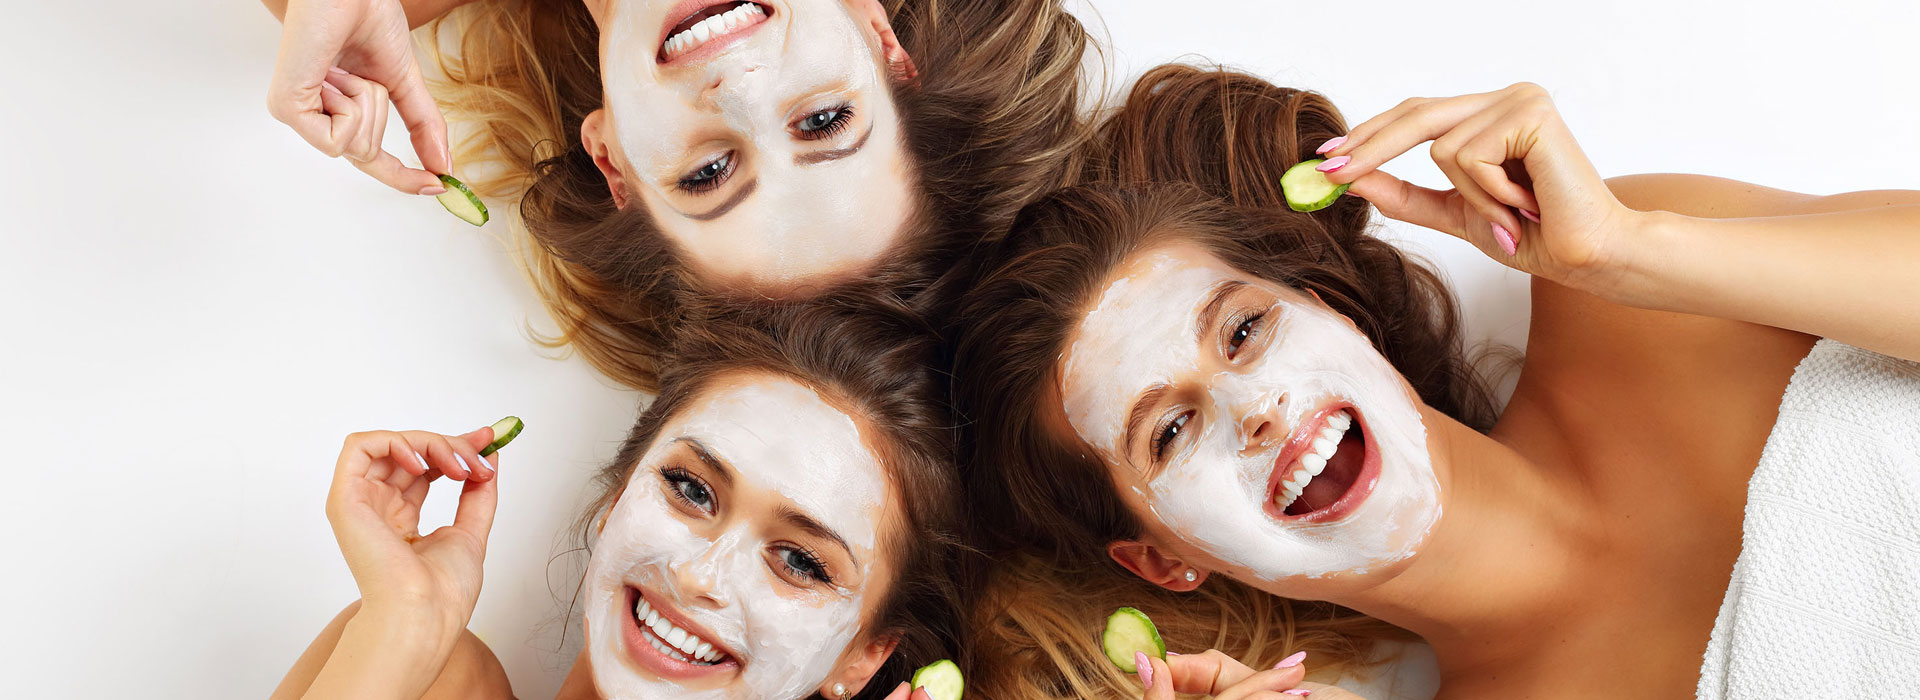 girls enjoying facial treatment